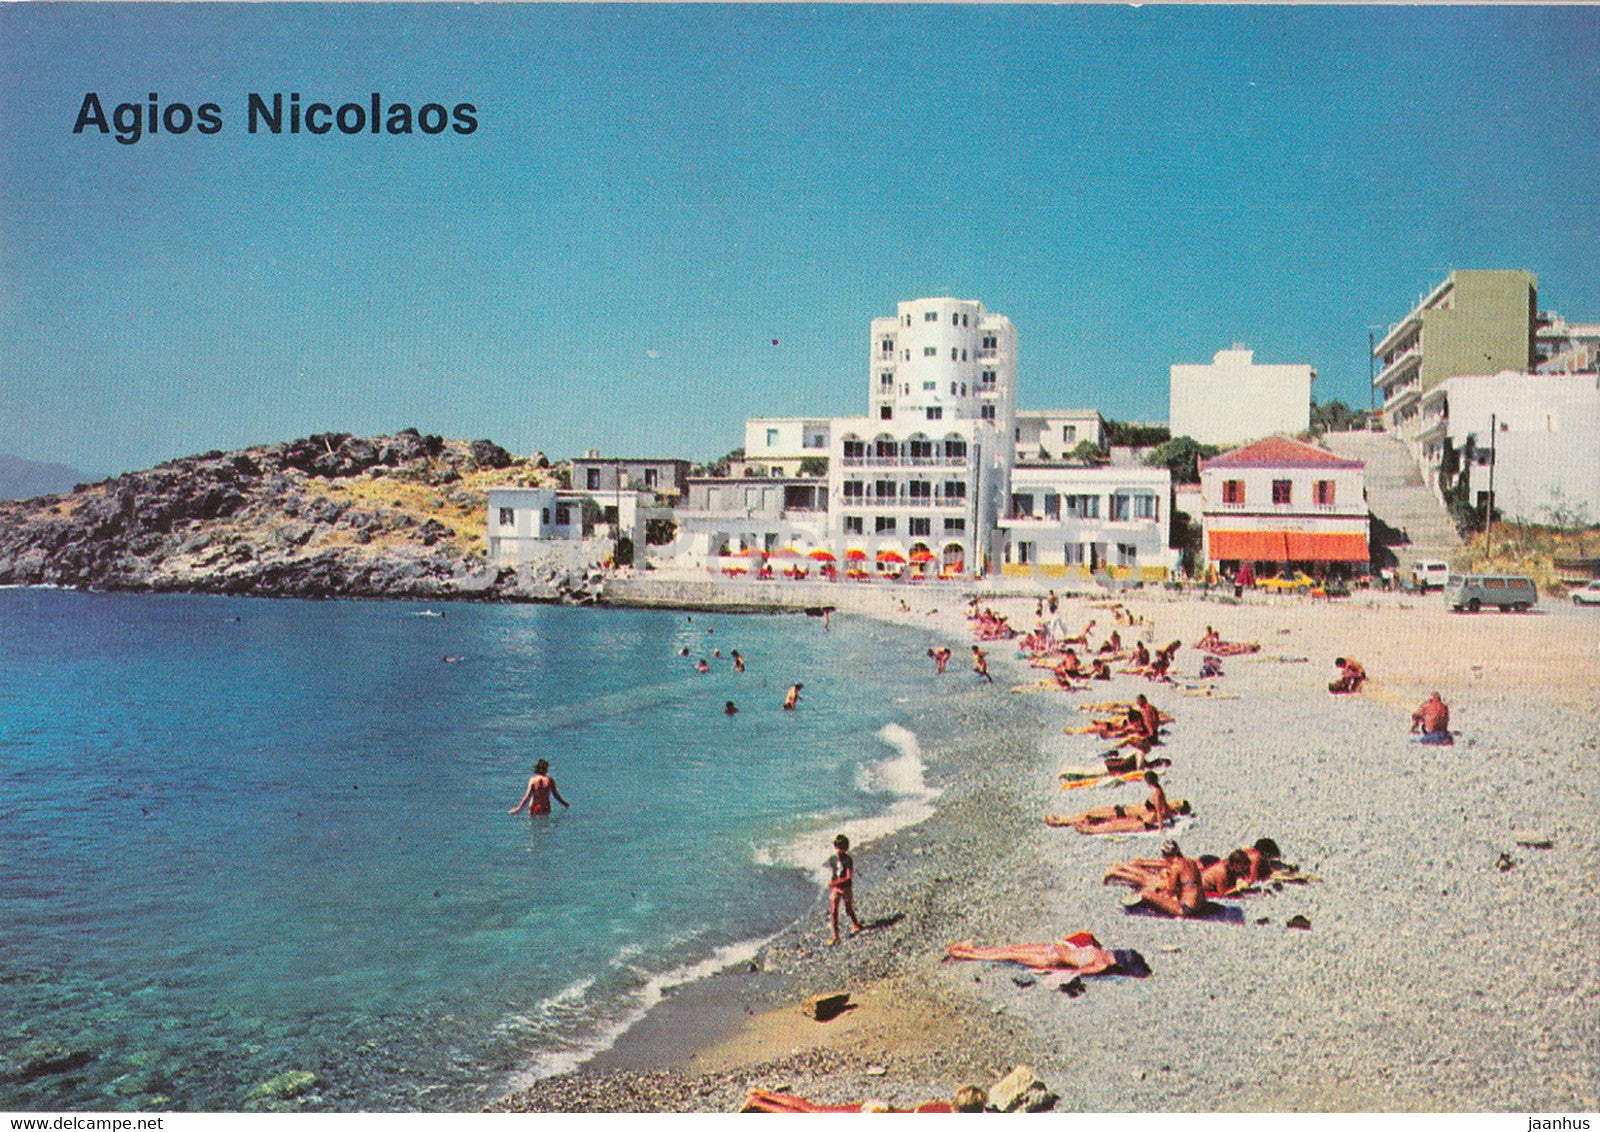 Crete - Agios Nikolaos - Agios Nicolaos - beach - Greece - unused - JH Postcards